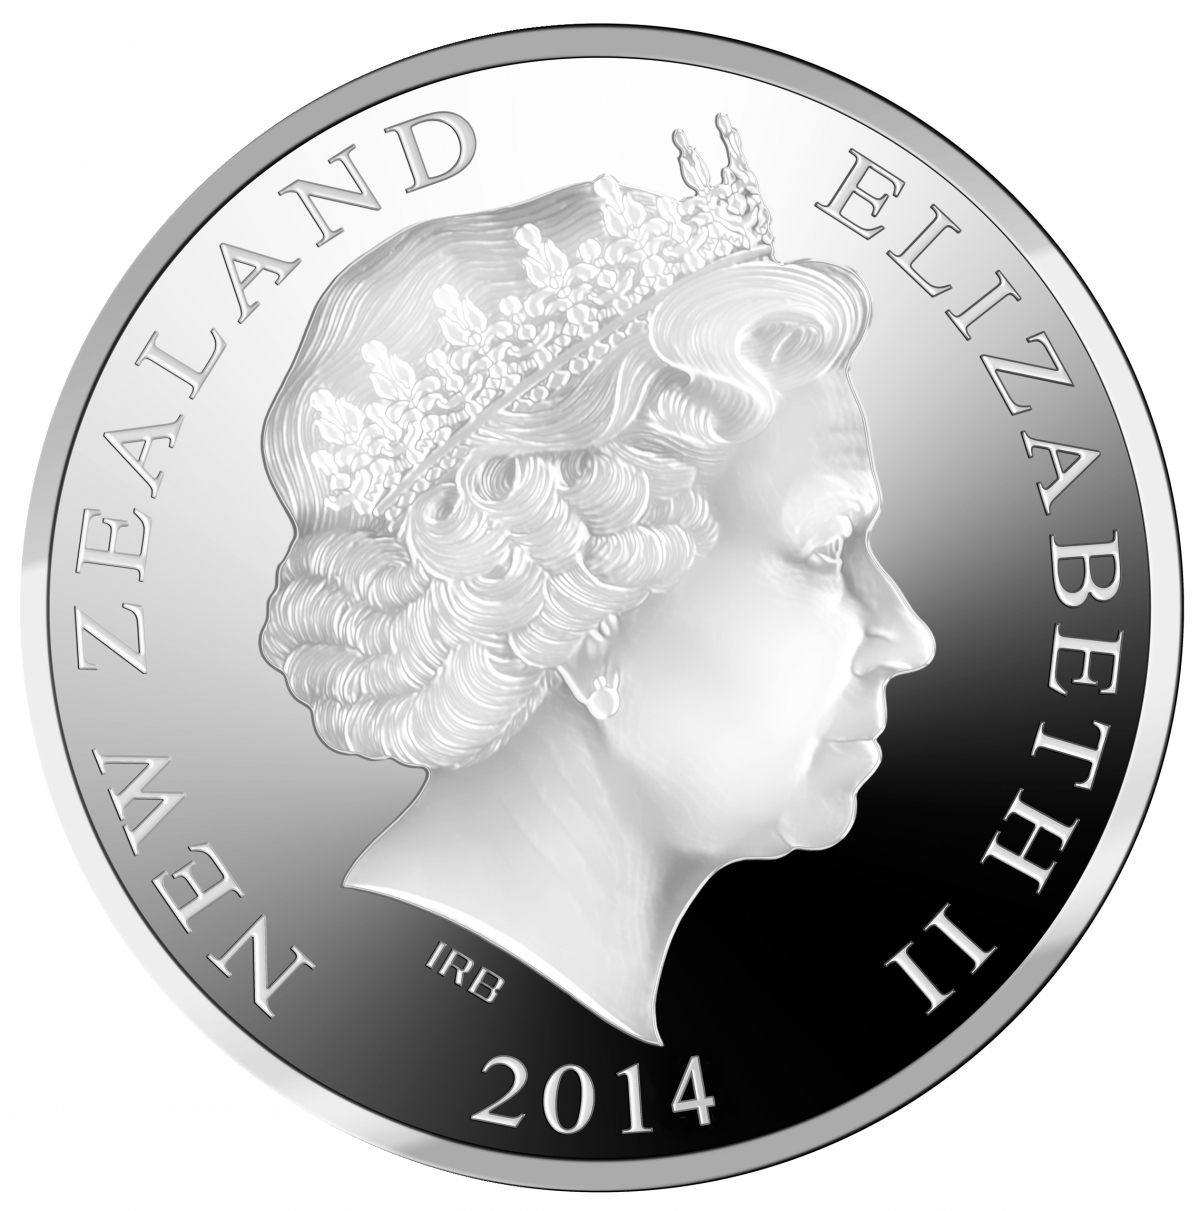 New Zealand Posts royal coin